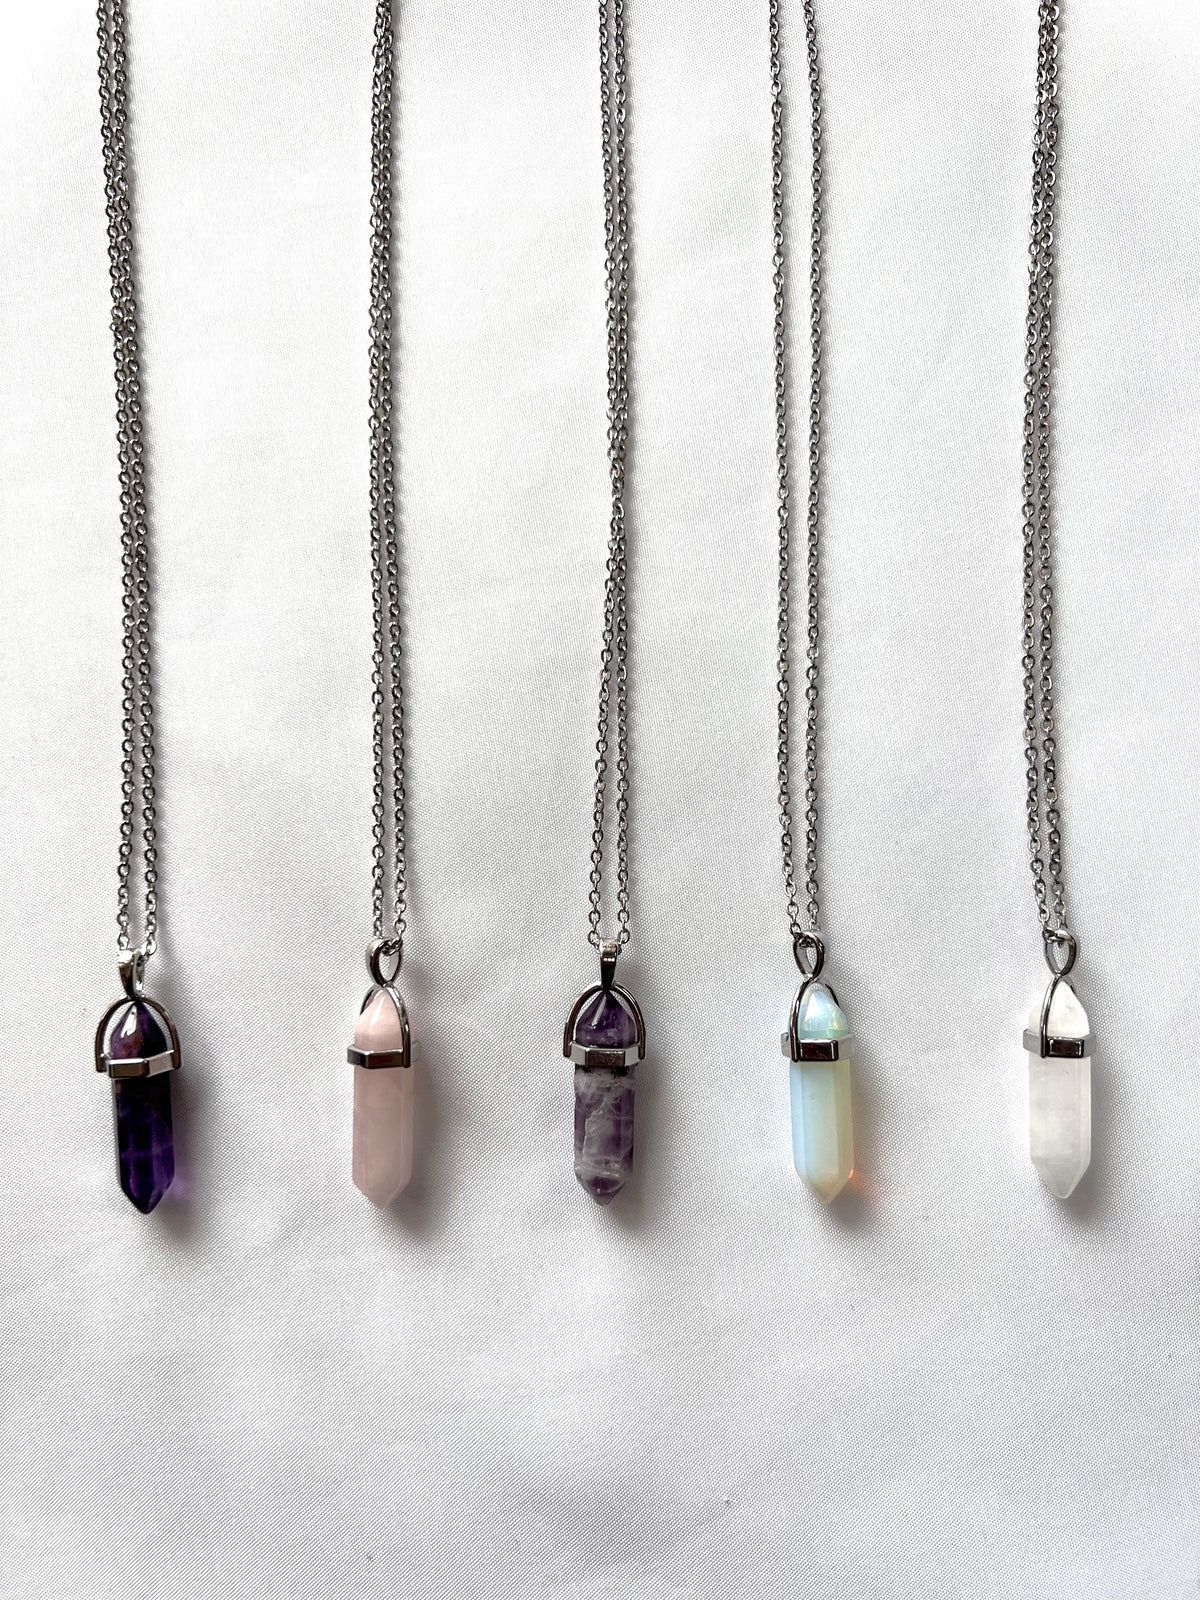 Pencil-shaped crystal on a silver chain. Choose between: amethyst, aventurine, rose quartz, fluorite, opalite, or clear quartz